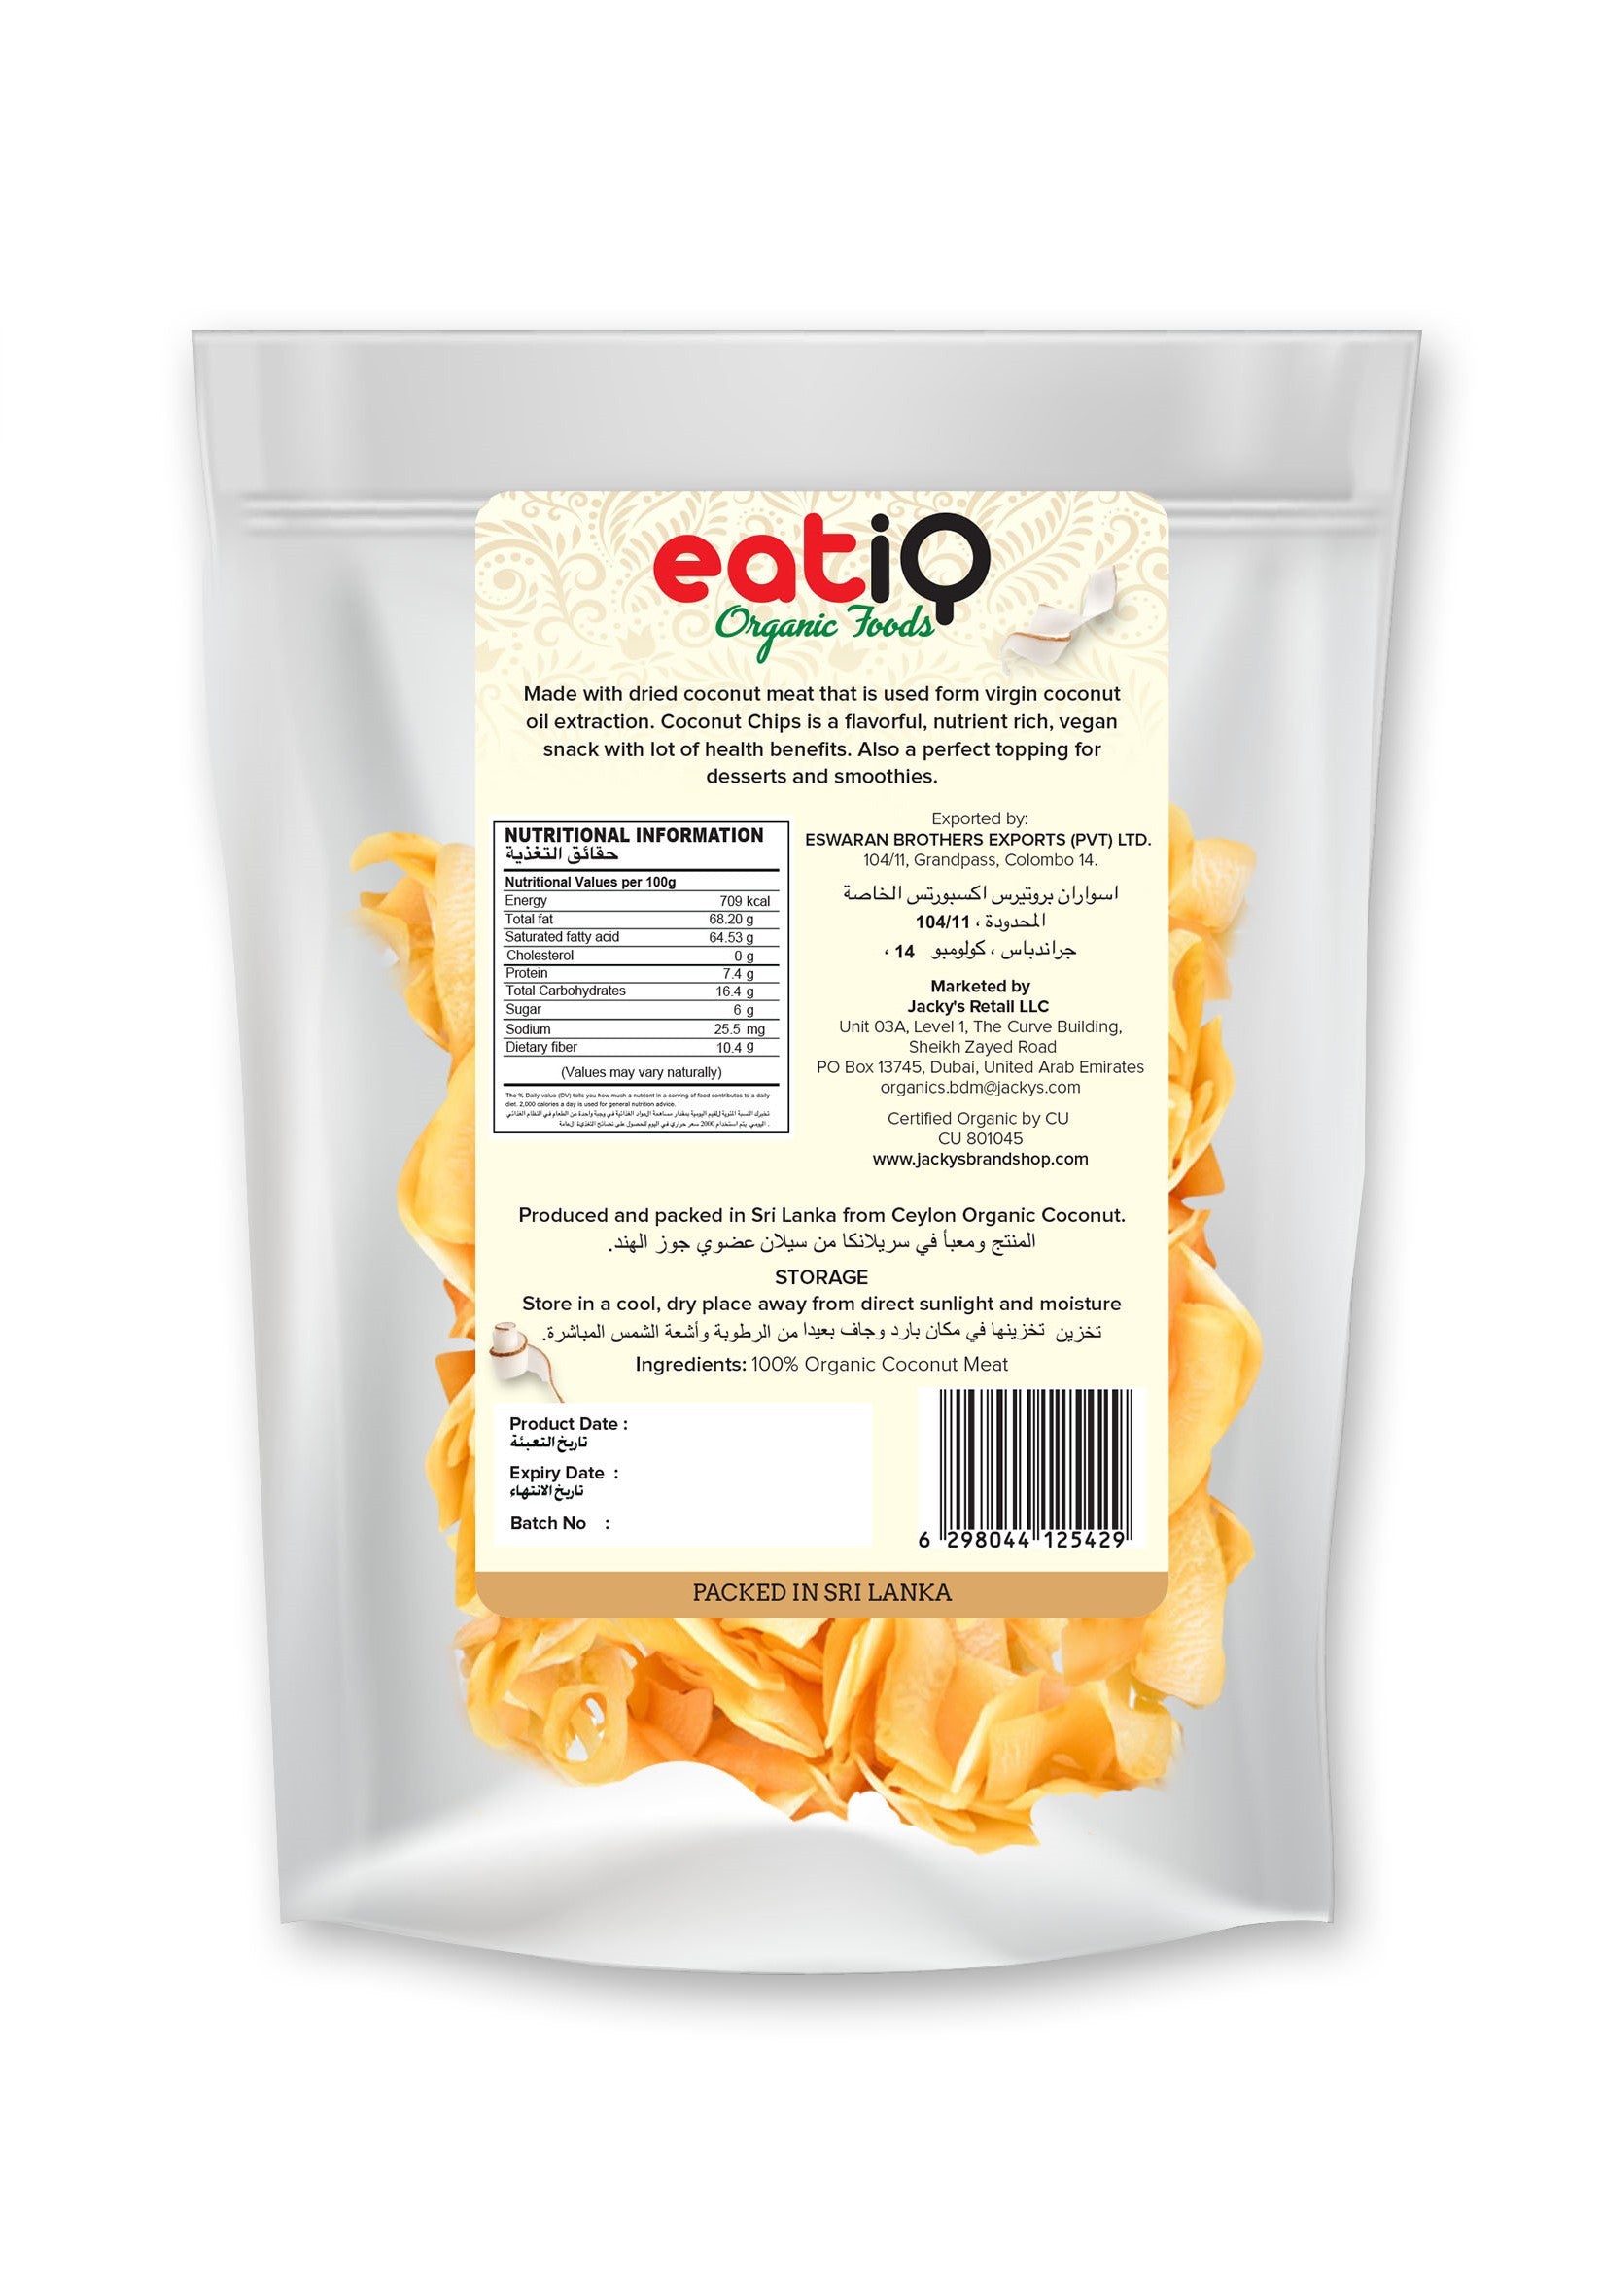 EATIQ ORGANIC FOODS Organic Coconut Chips, 100g